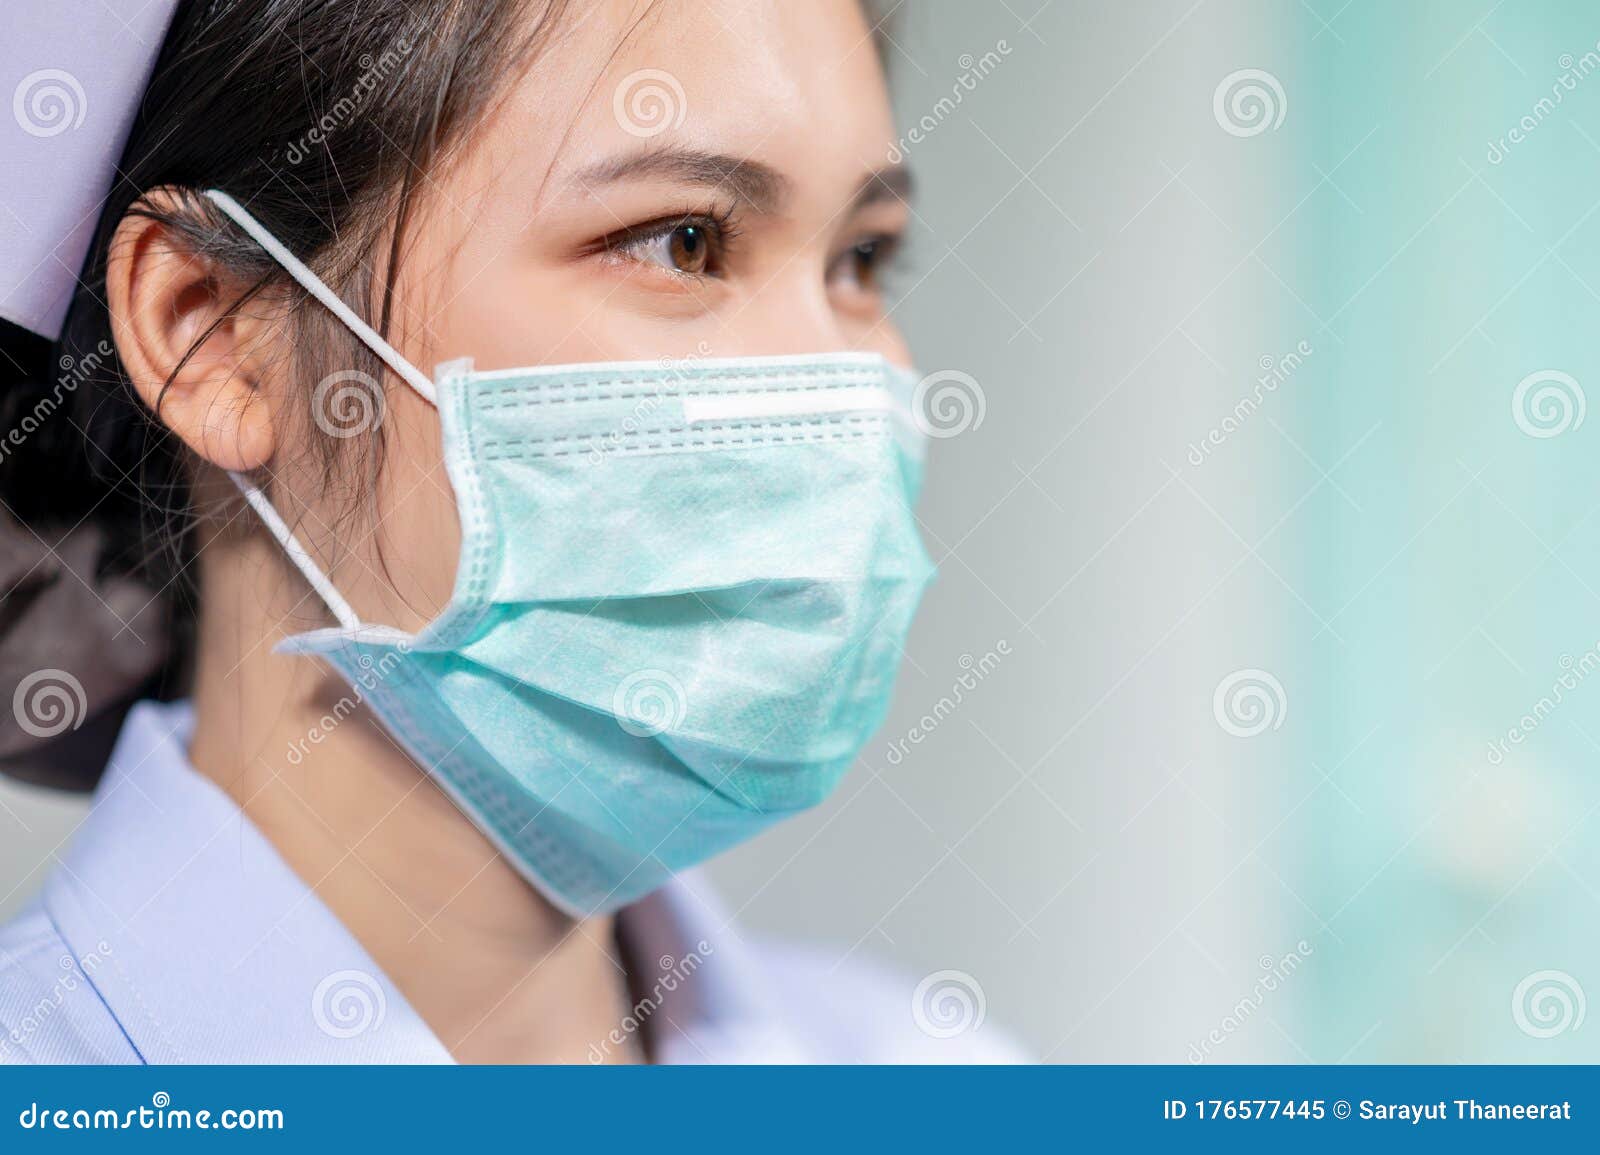 nurses wear masks to protect against coronavirus covid19